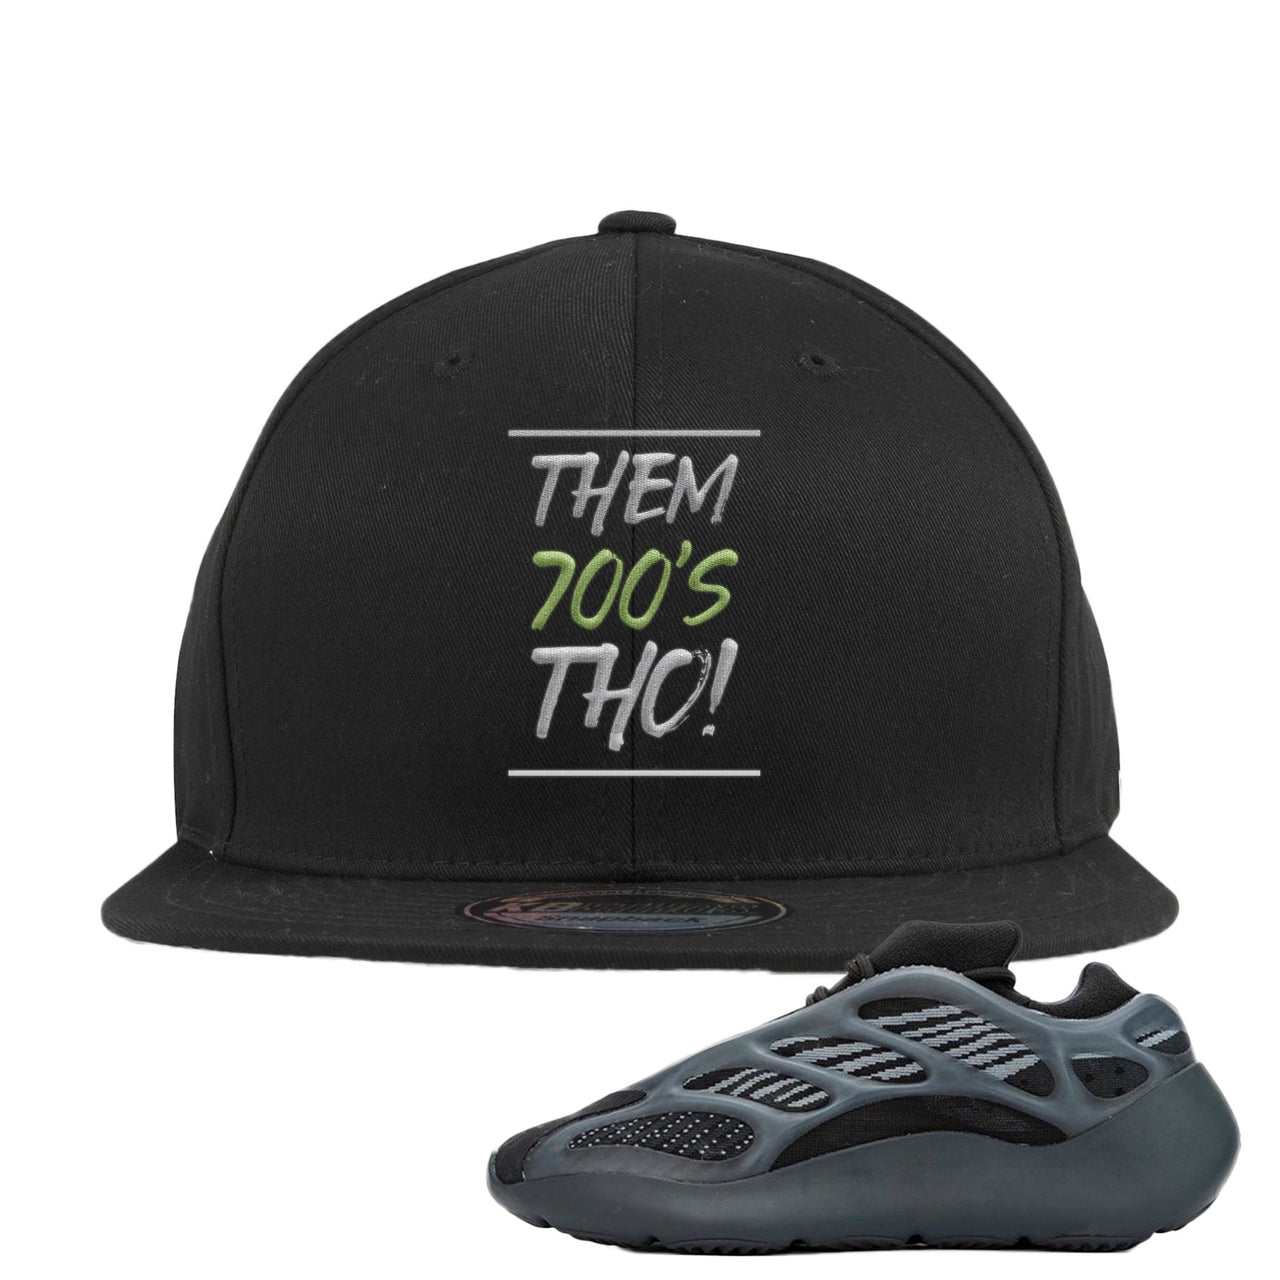 Alvah v3 700s Snapback Hat | Them 700's Tho!, Black